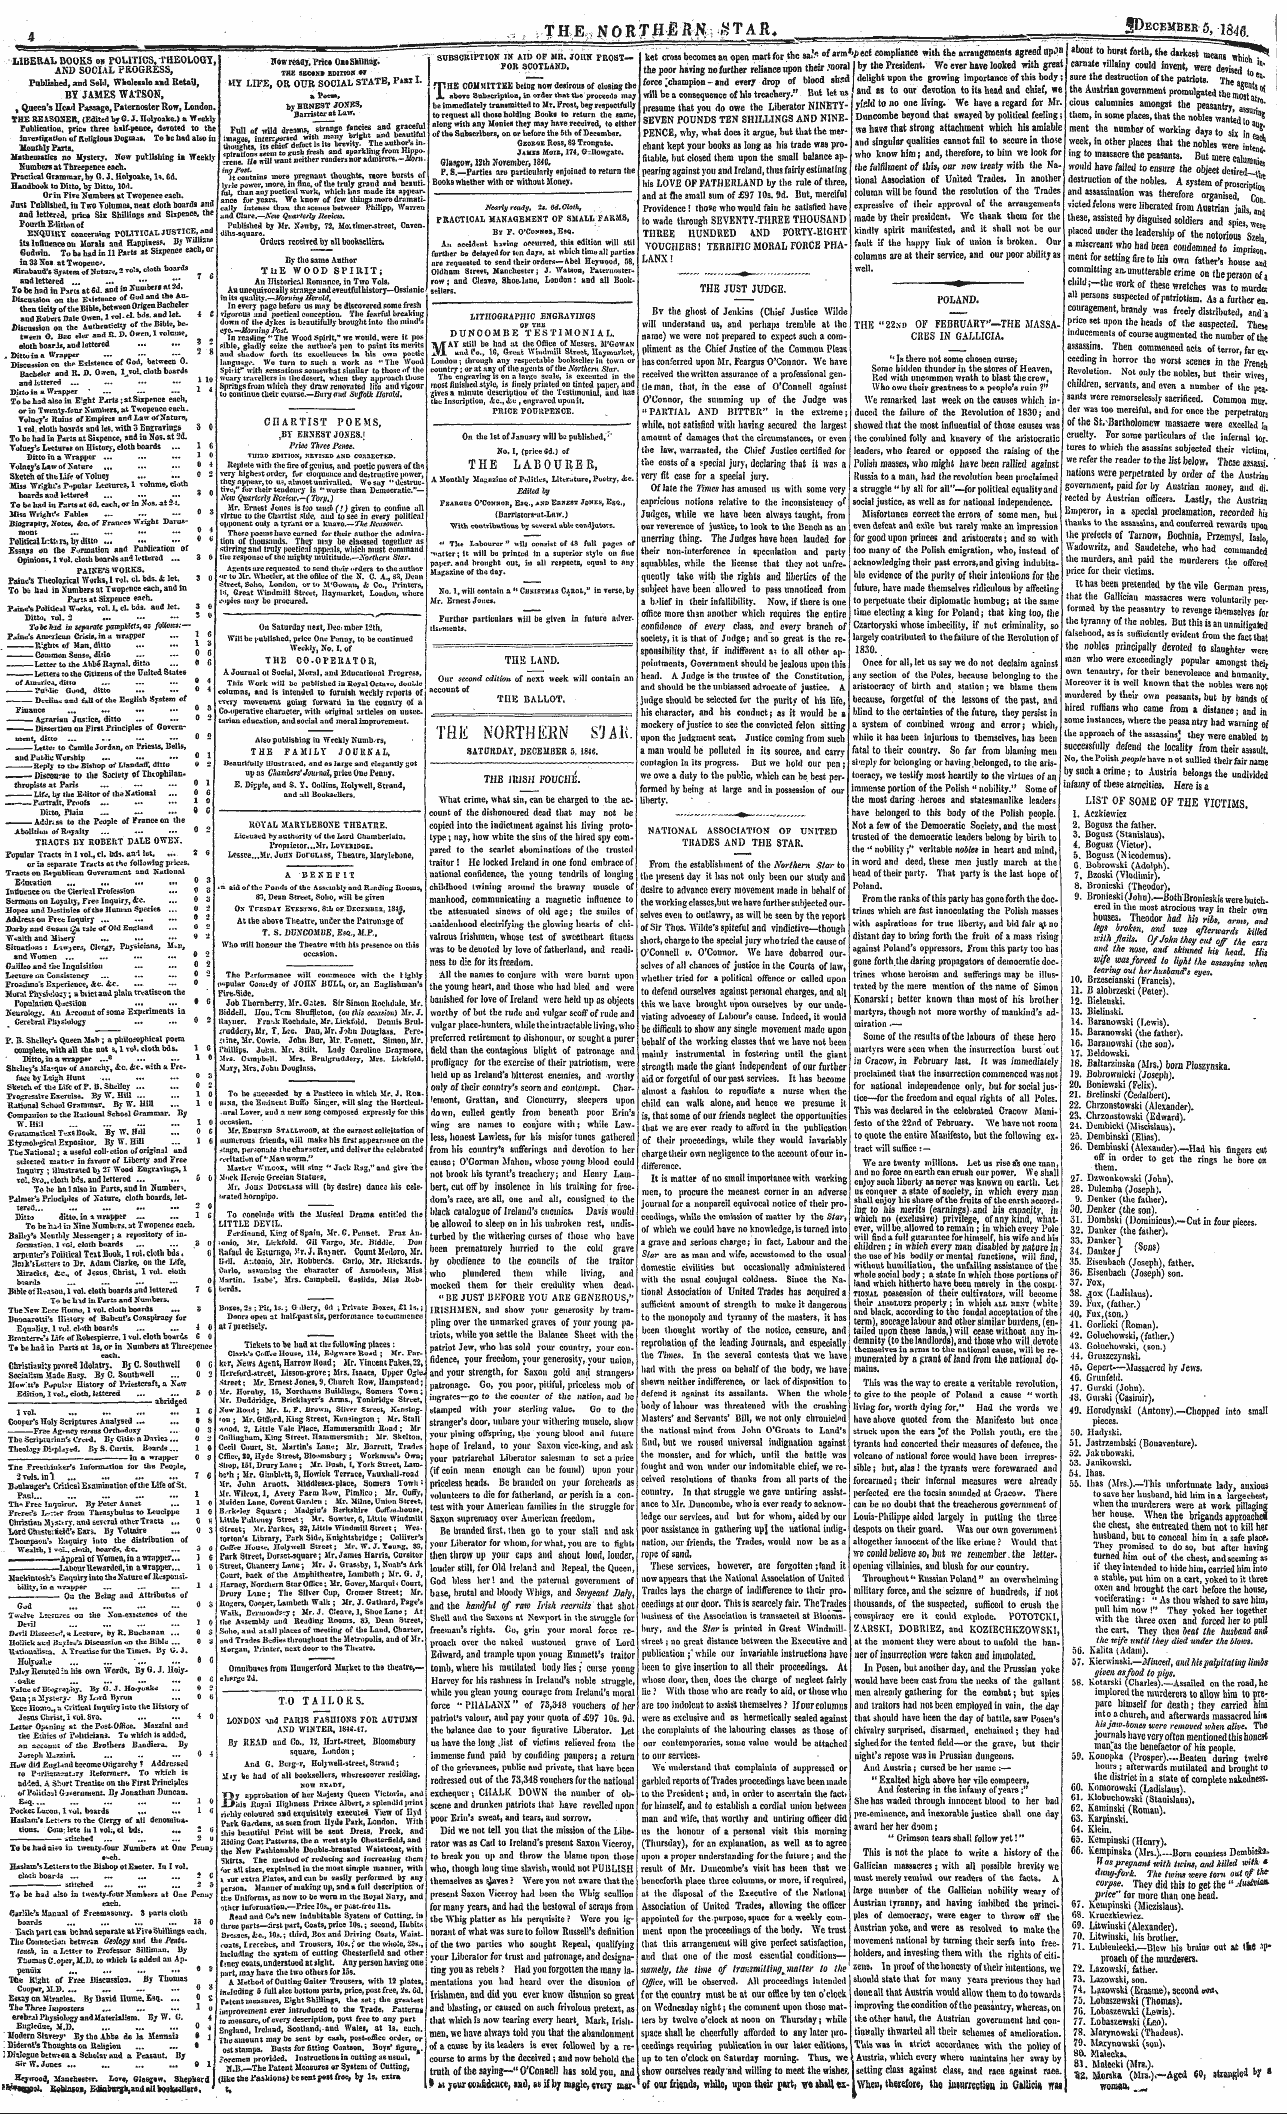 Northern Star (1837-1852): jS F Y, 3rd edition - Ad00409